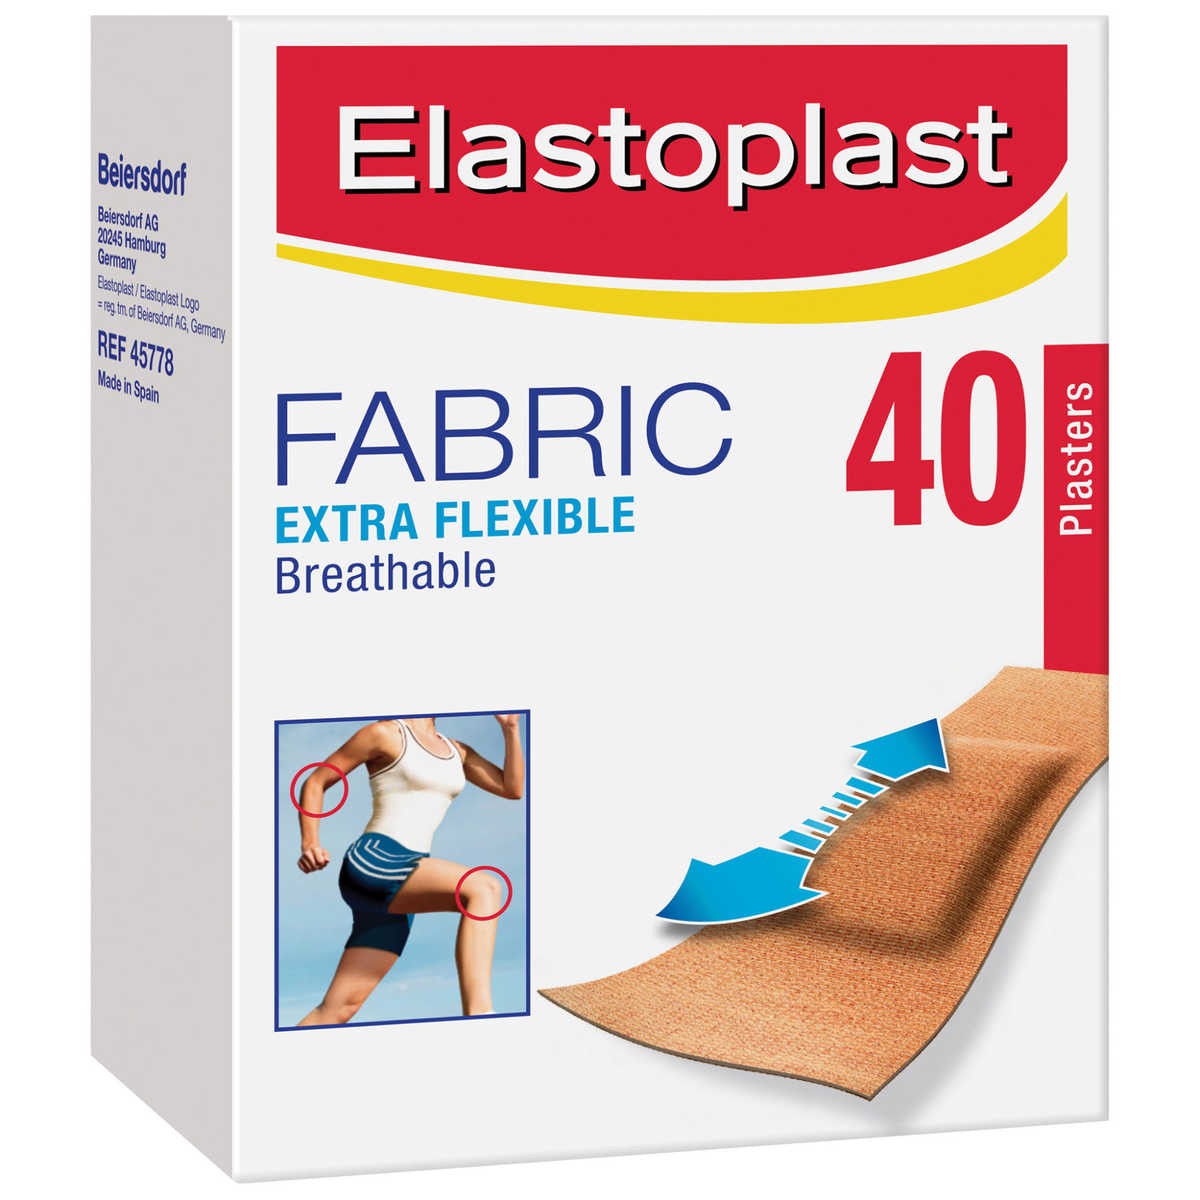 Elastoplast Fabric 40pk